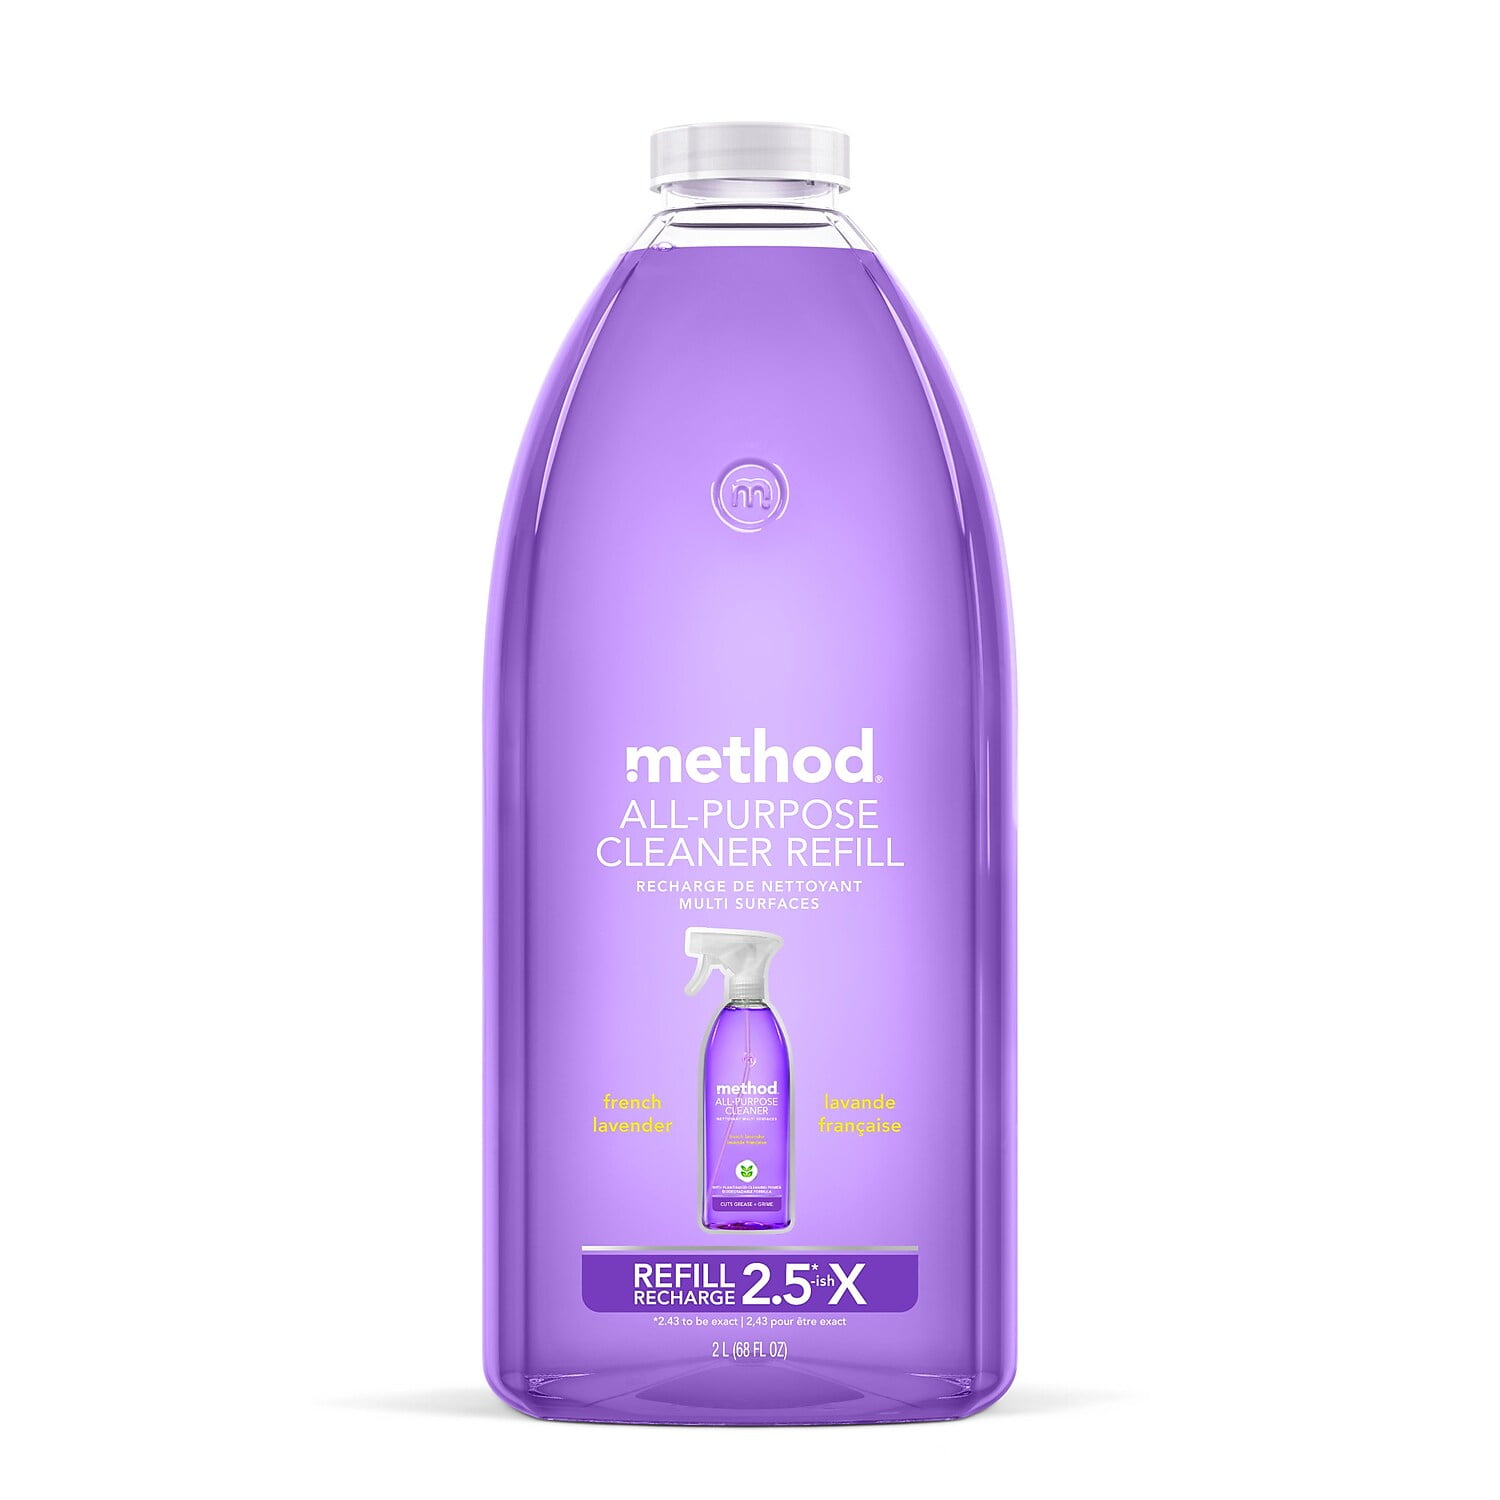 Method All-Purpose Cleaner Refill, French Lavender, 68 oz, 68 fl oz